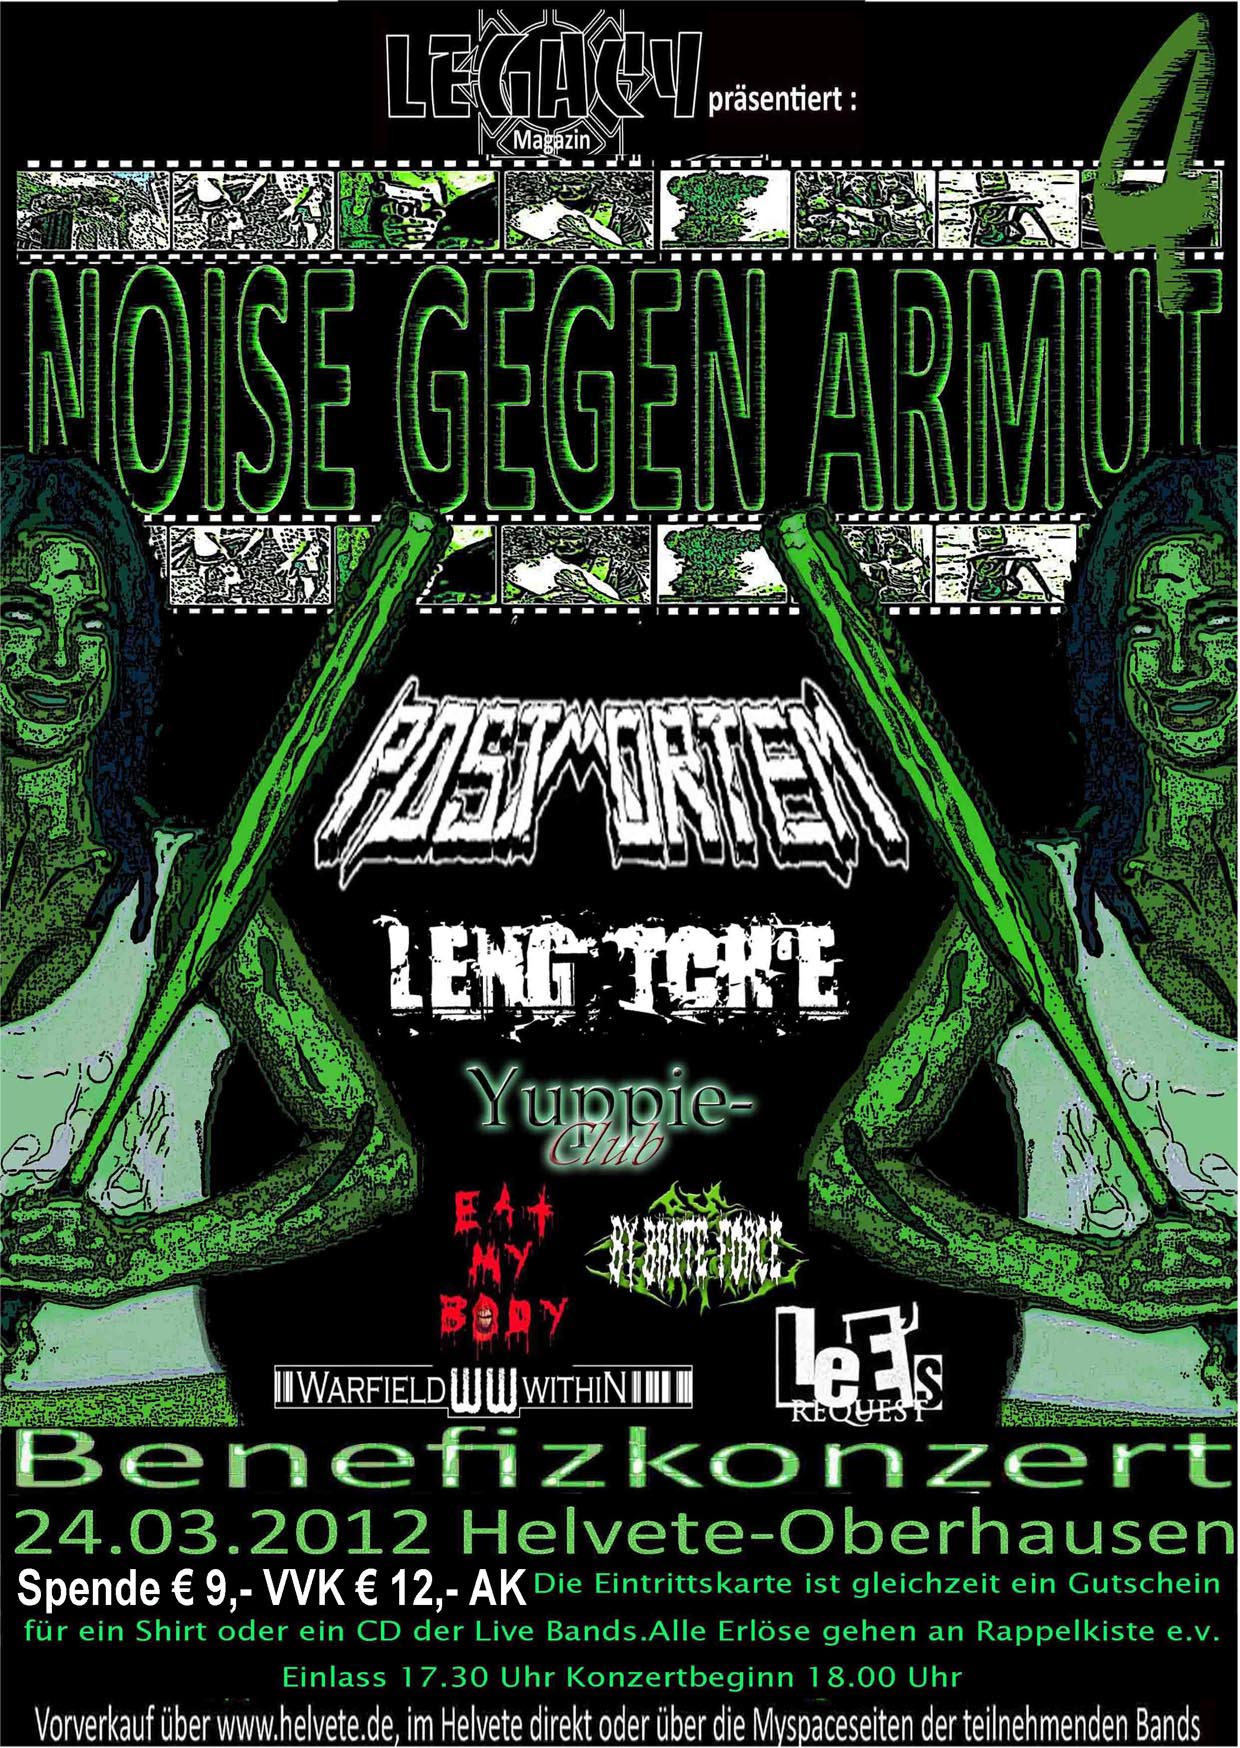 Official Flyer: Noise gegen Armut 4